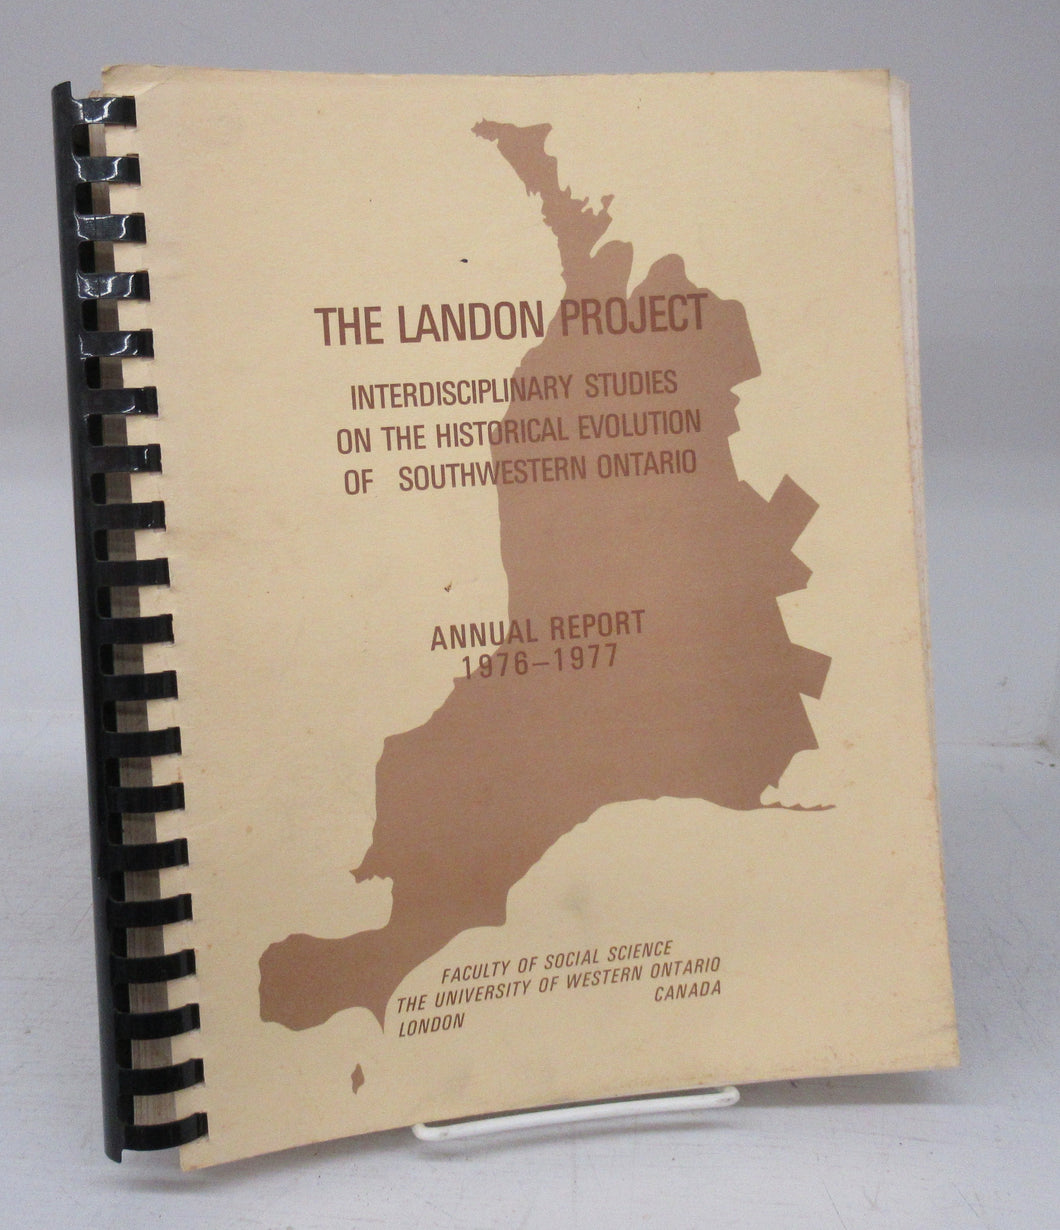 The Landon Project: Interdisciplinary Studies on the Historical Evolution of Southwestern Ontario: Annual Report 1976-1977